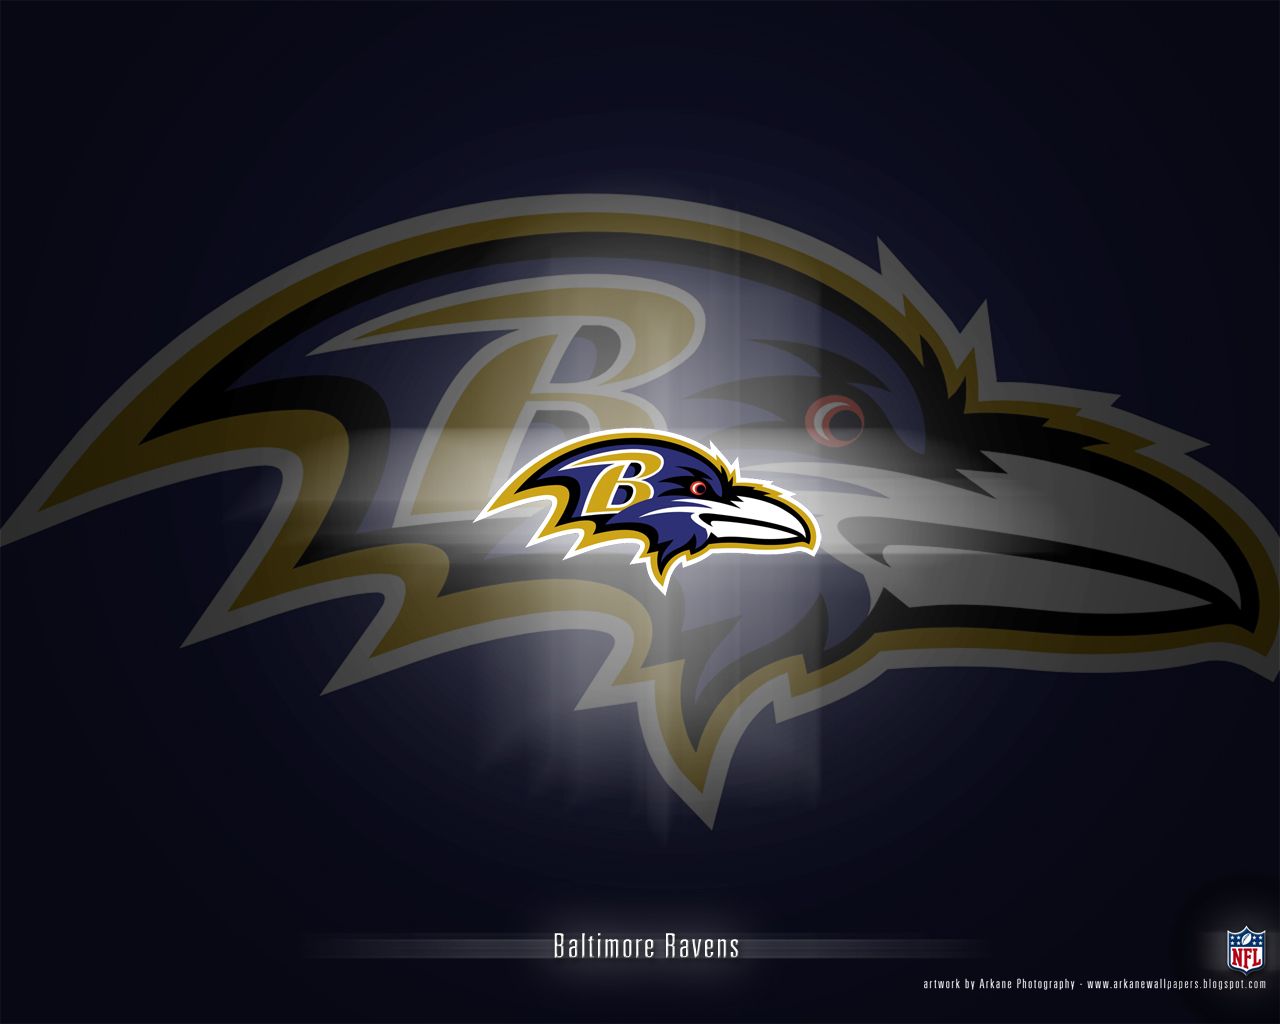 Baltimore Ravens images wallpaper 78670991 | cute Wallpapers